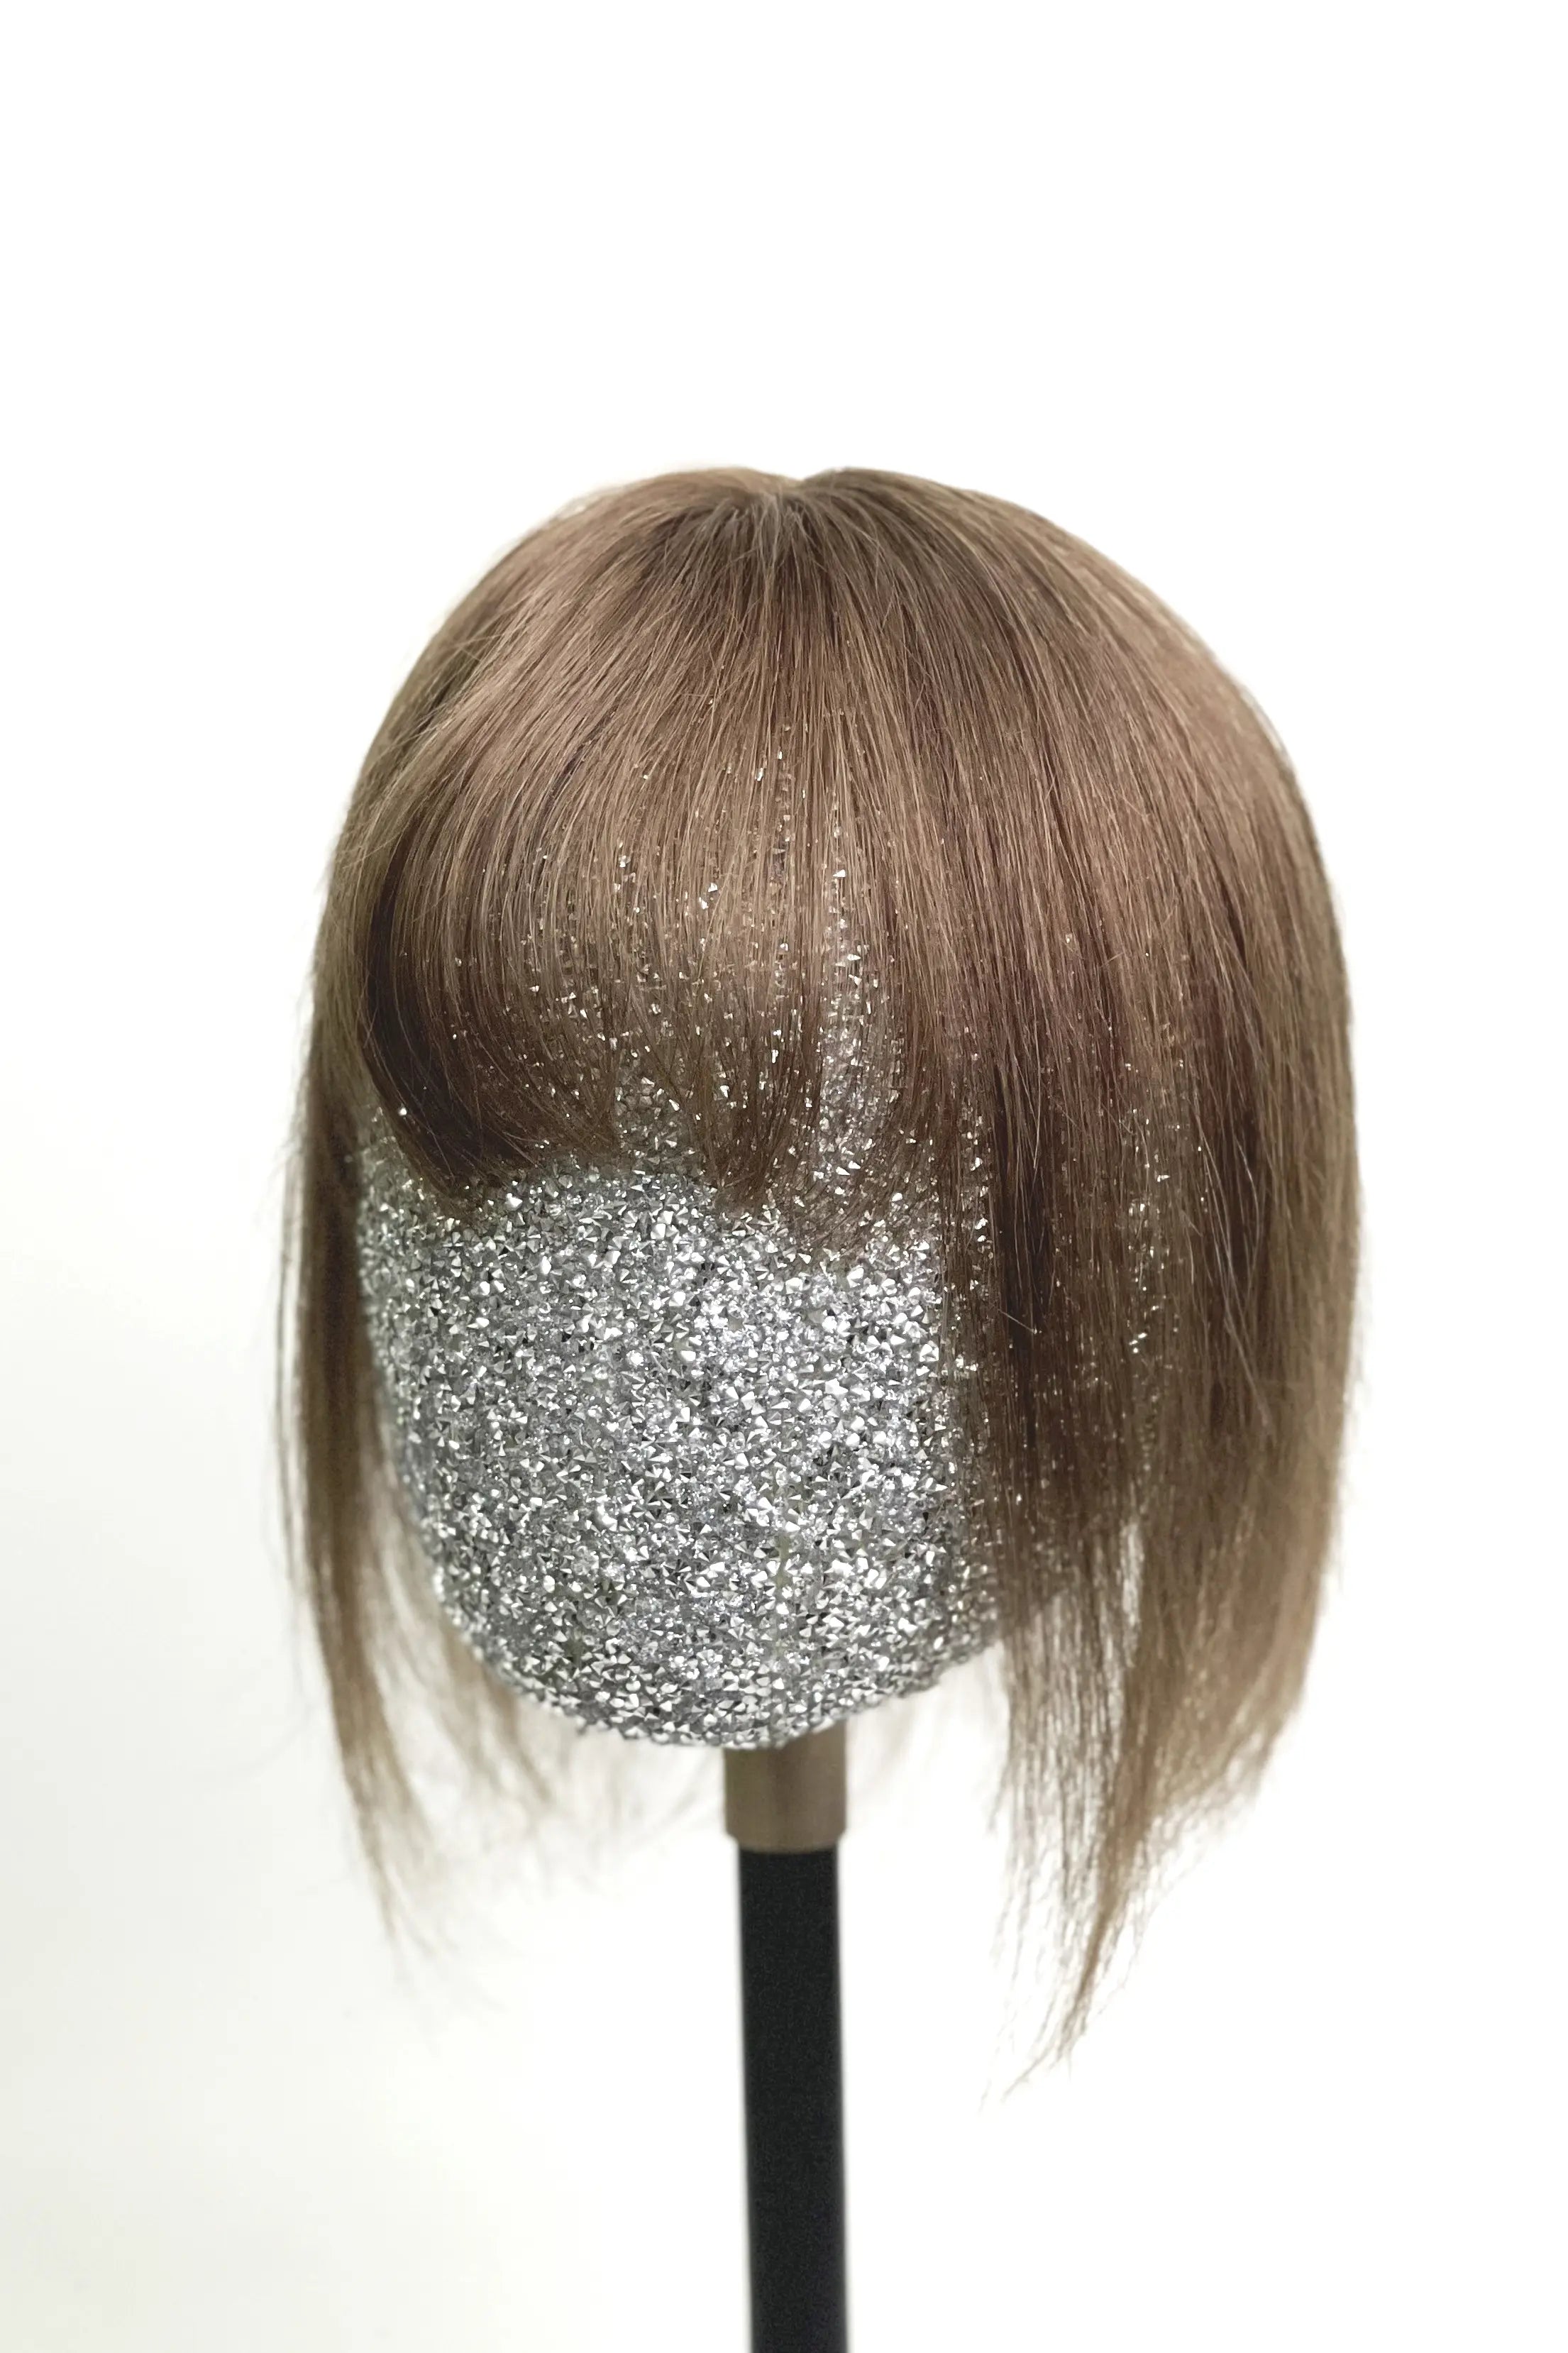 Mona-B Handmade Human Hair Topper with Bangs Medium Ash Brown #6